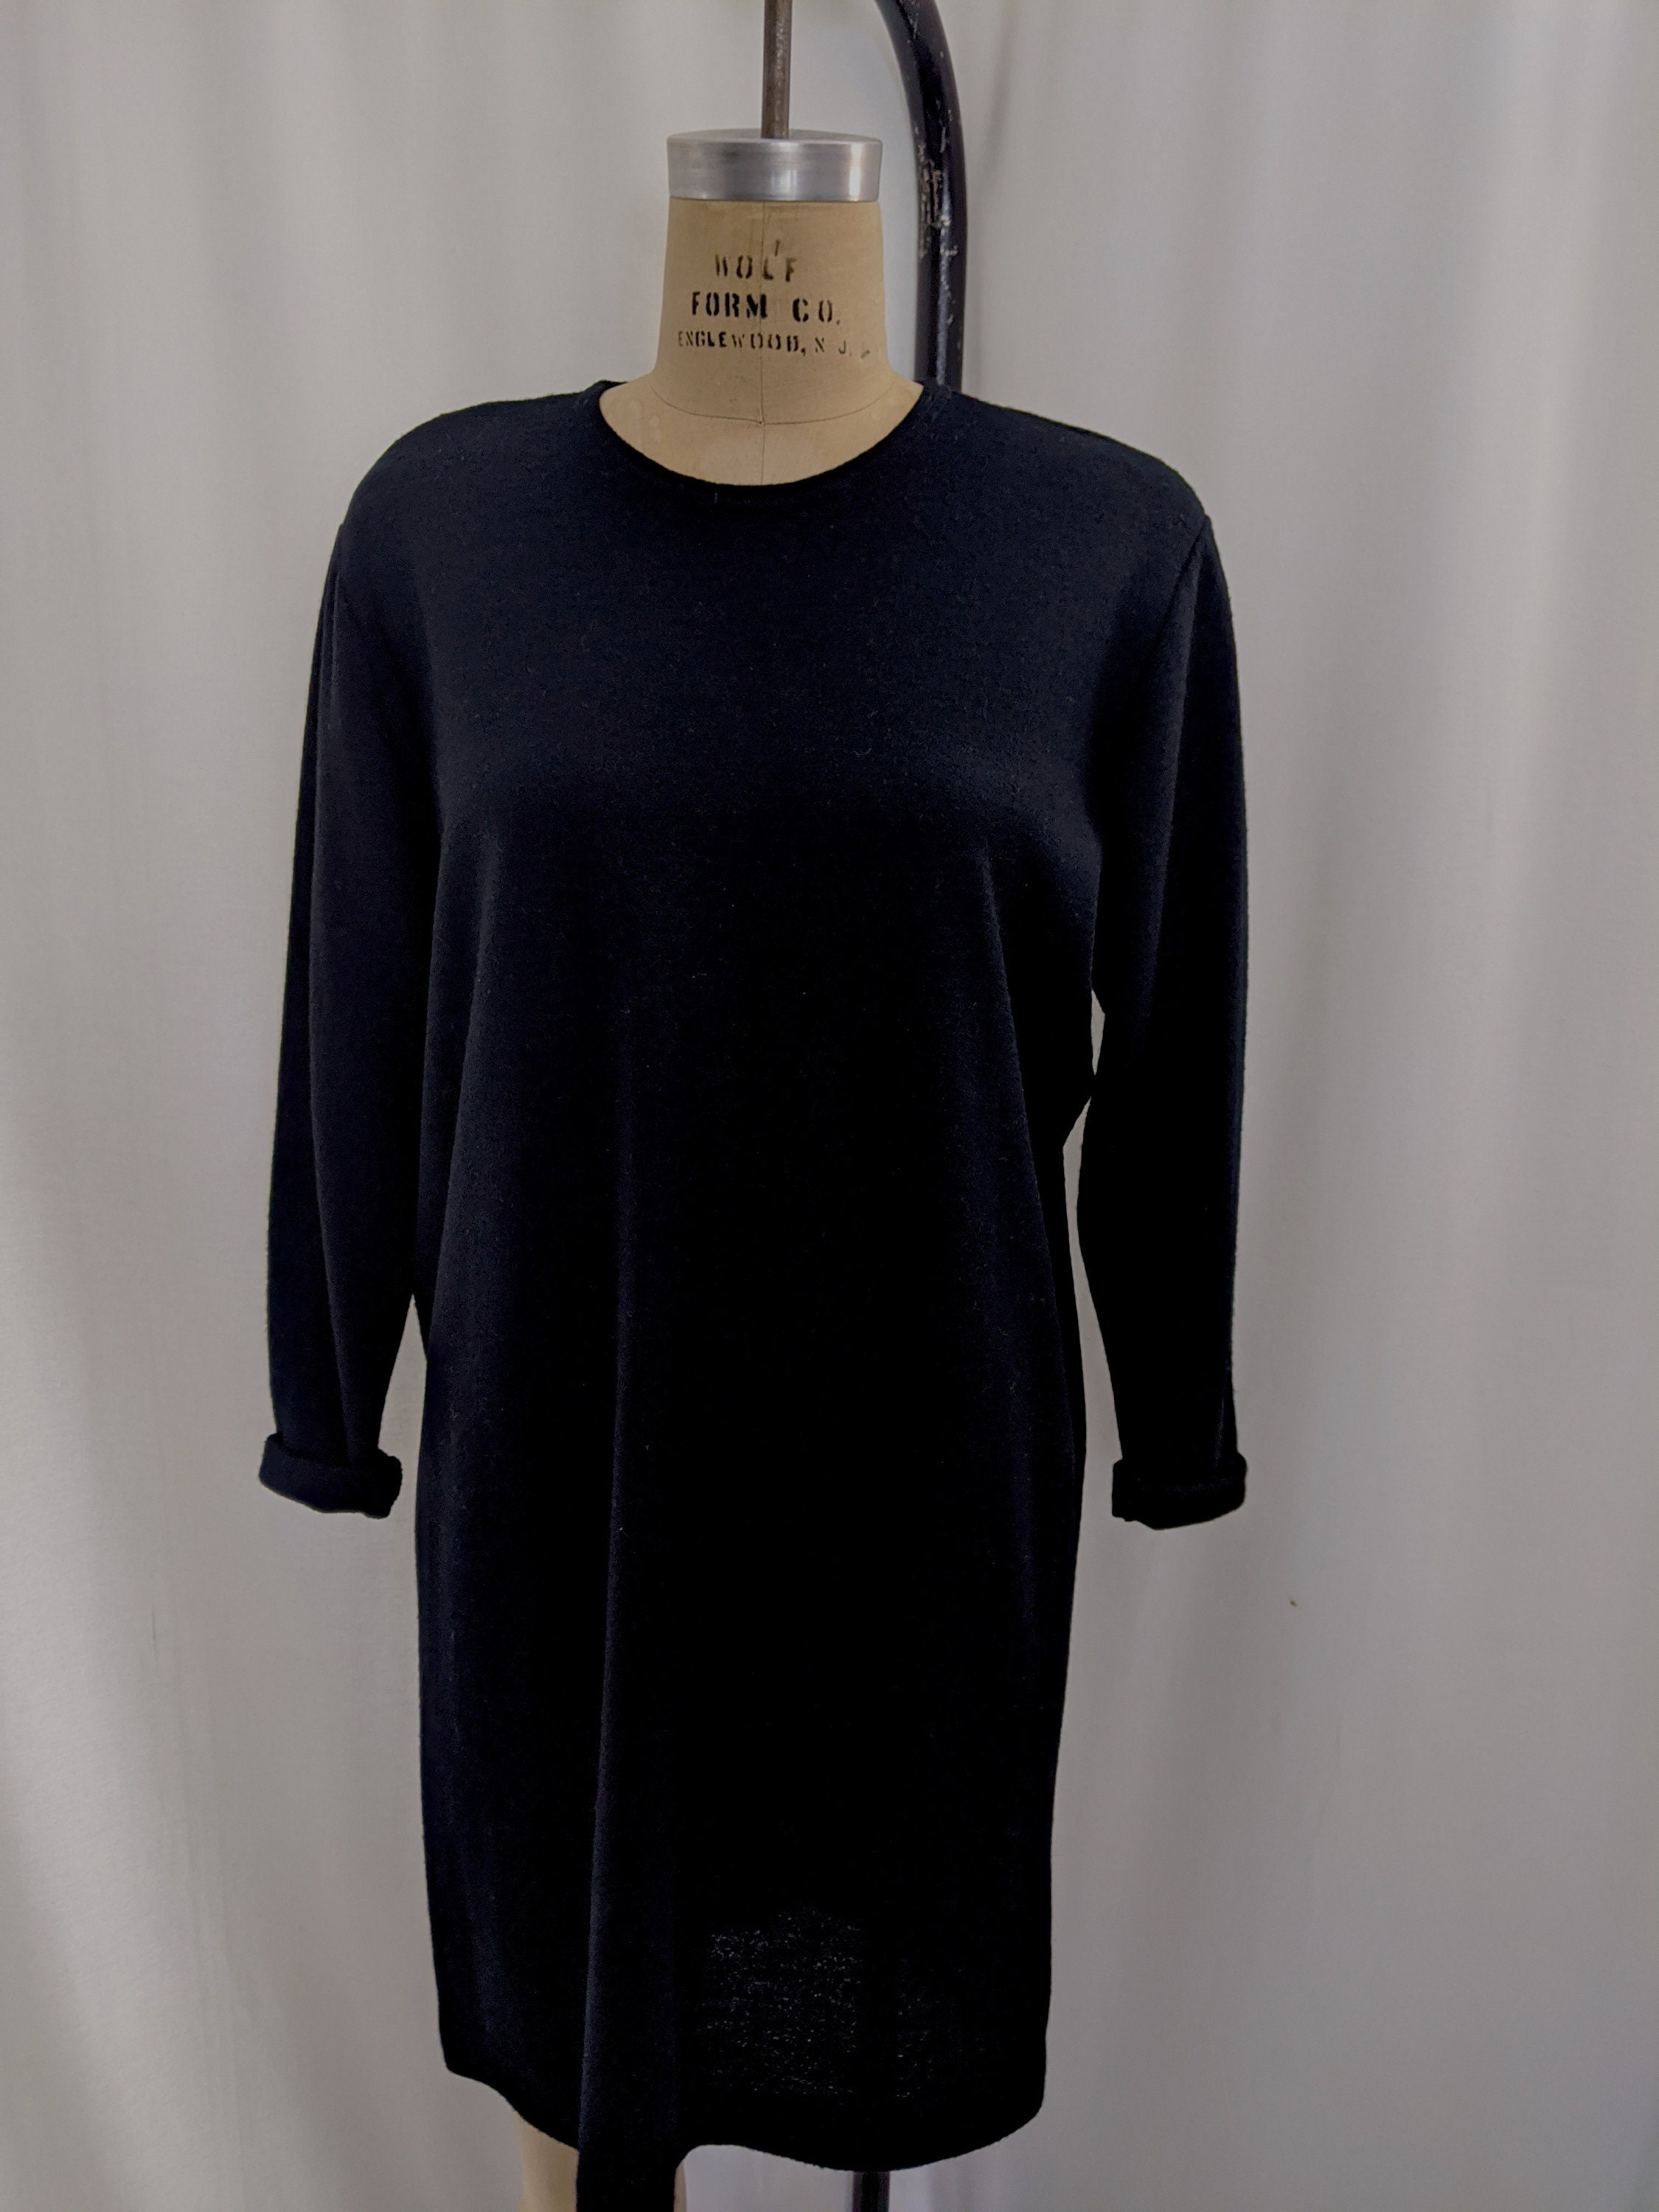 Vintage 80s Minimalist Bettina Riedel wool slouchy dress in | Etsy